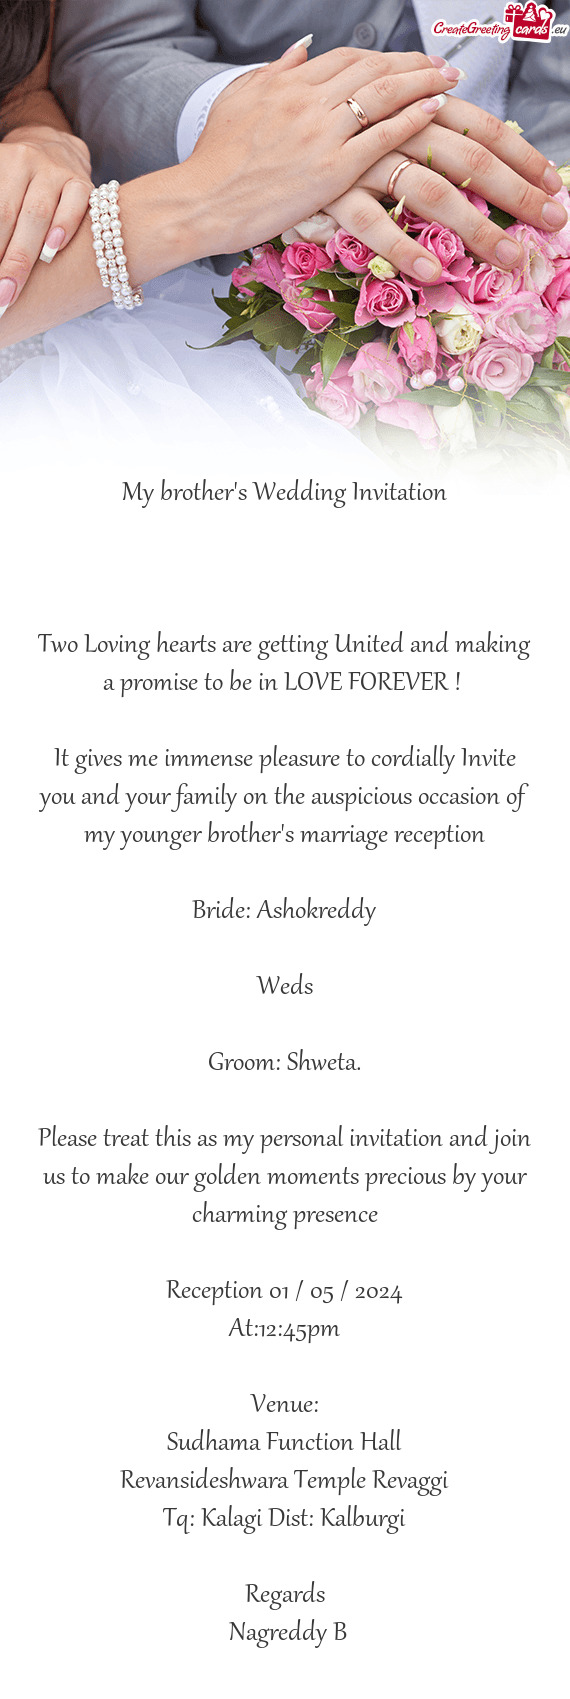 Bride: Ashokreddy